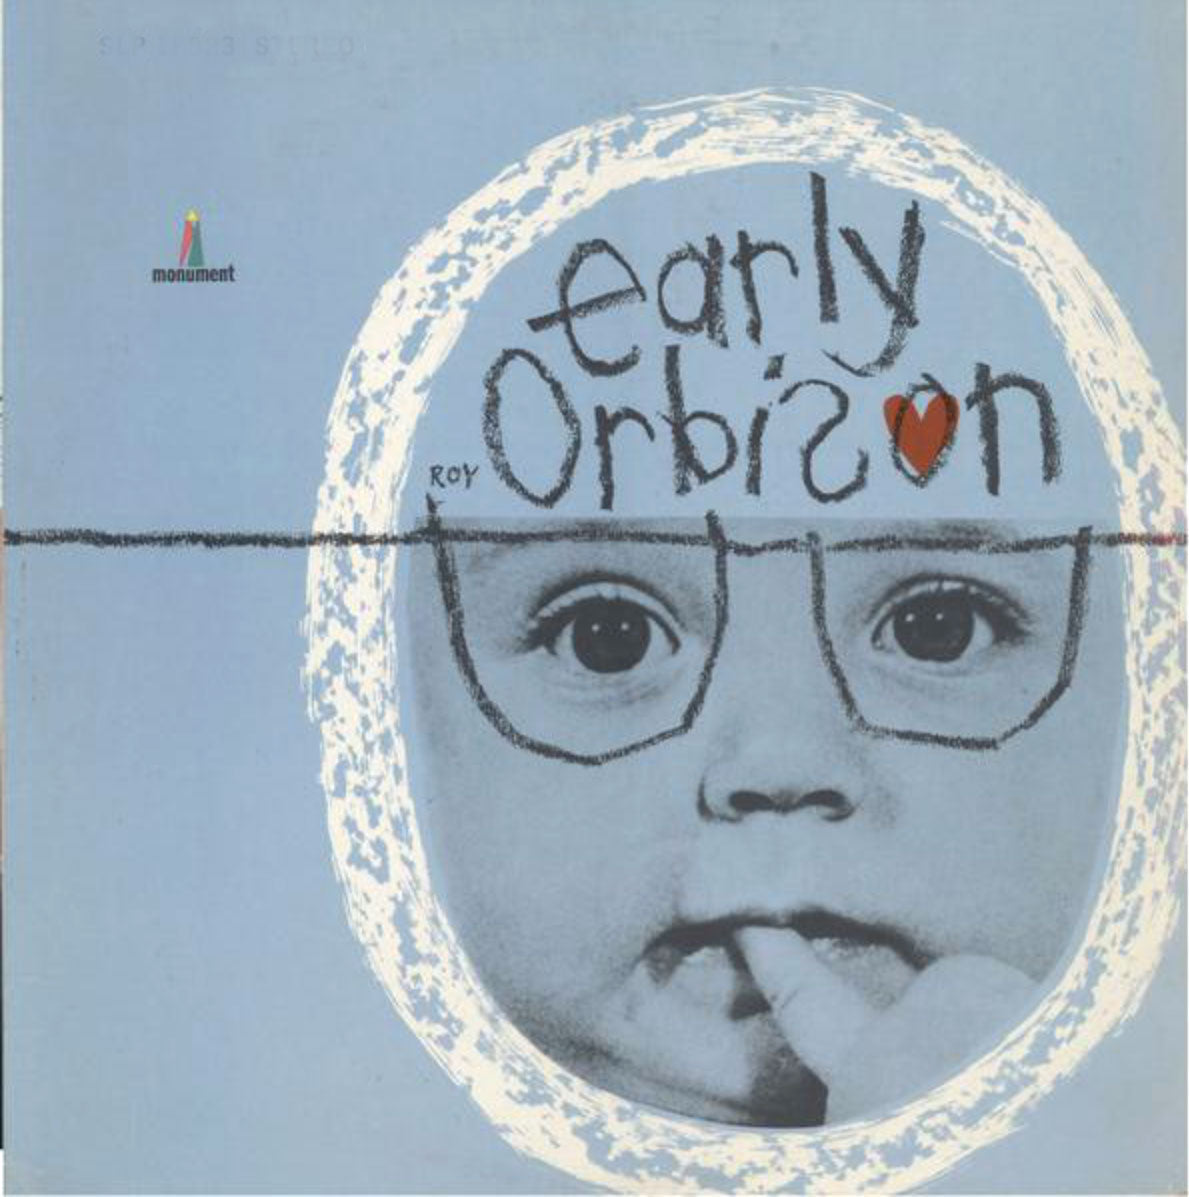 Roy Orbison ‎– Early Orbison